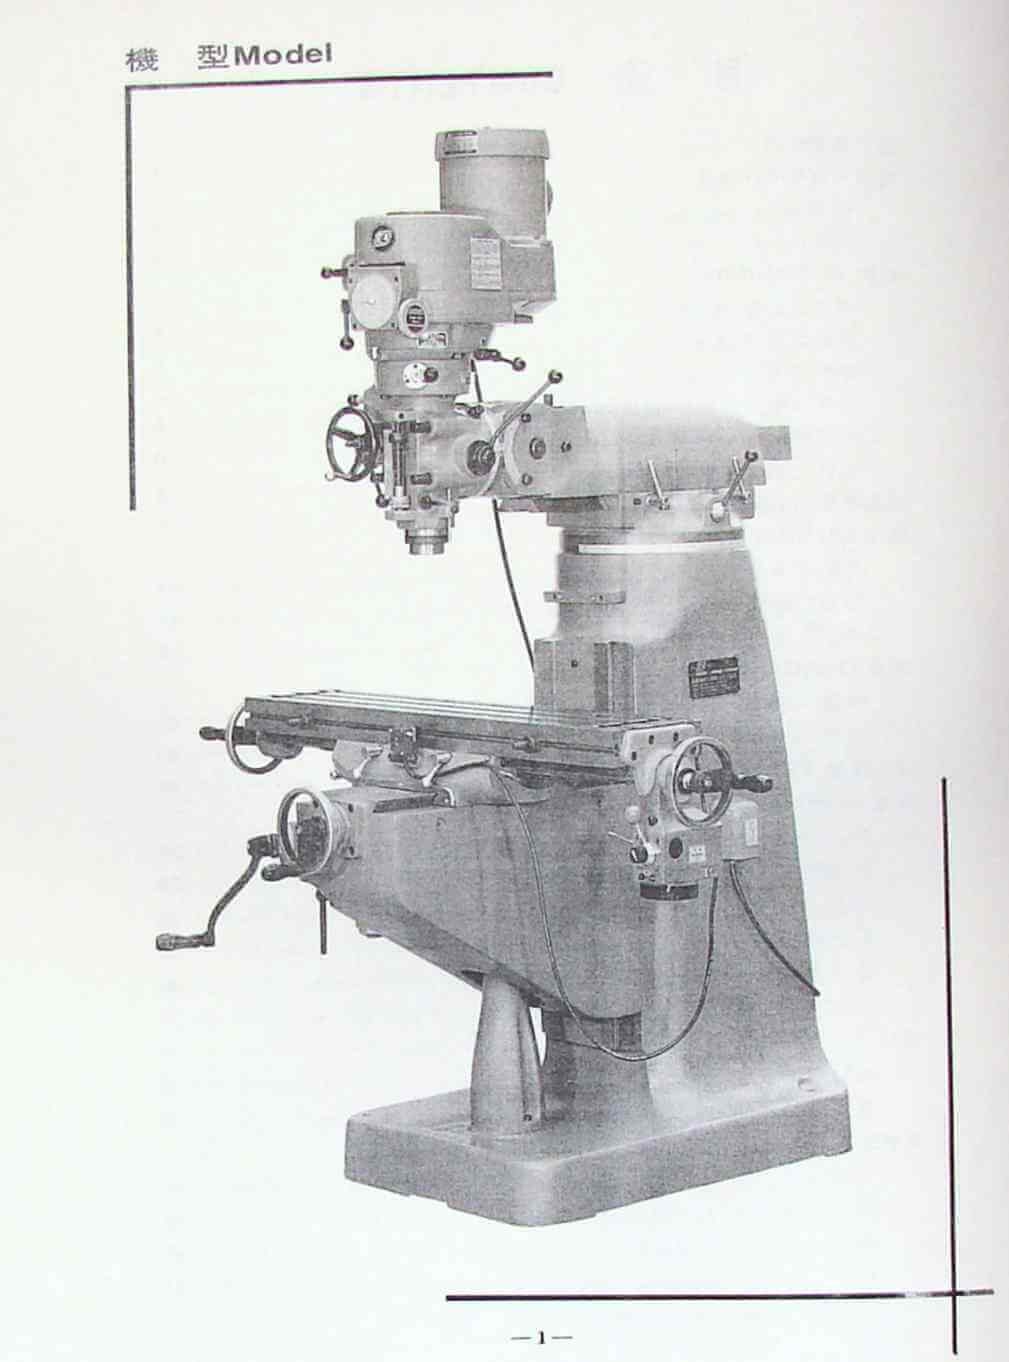 SUPERMAX YCM-1 1/2 VS Milling Machine Operator & Parts Manual 0715